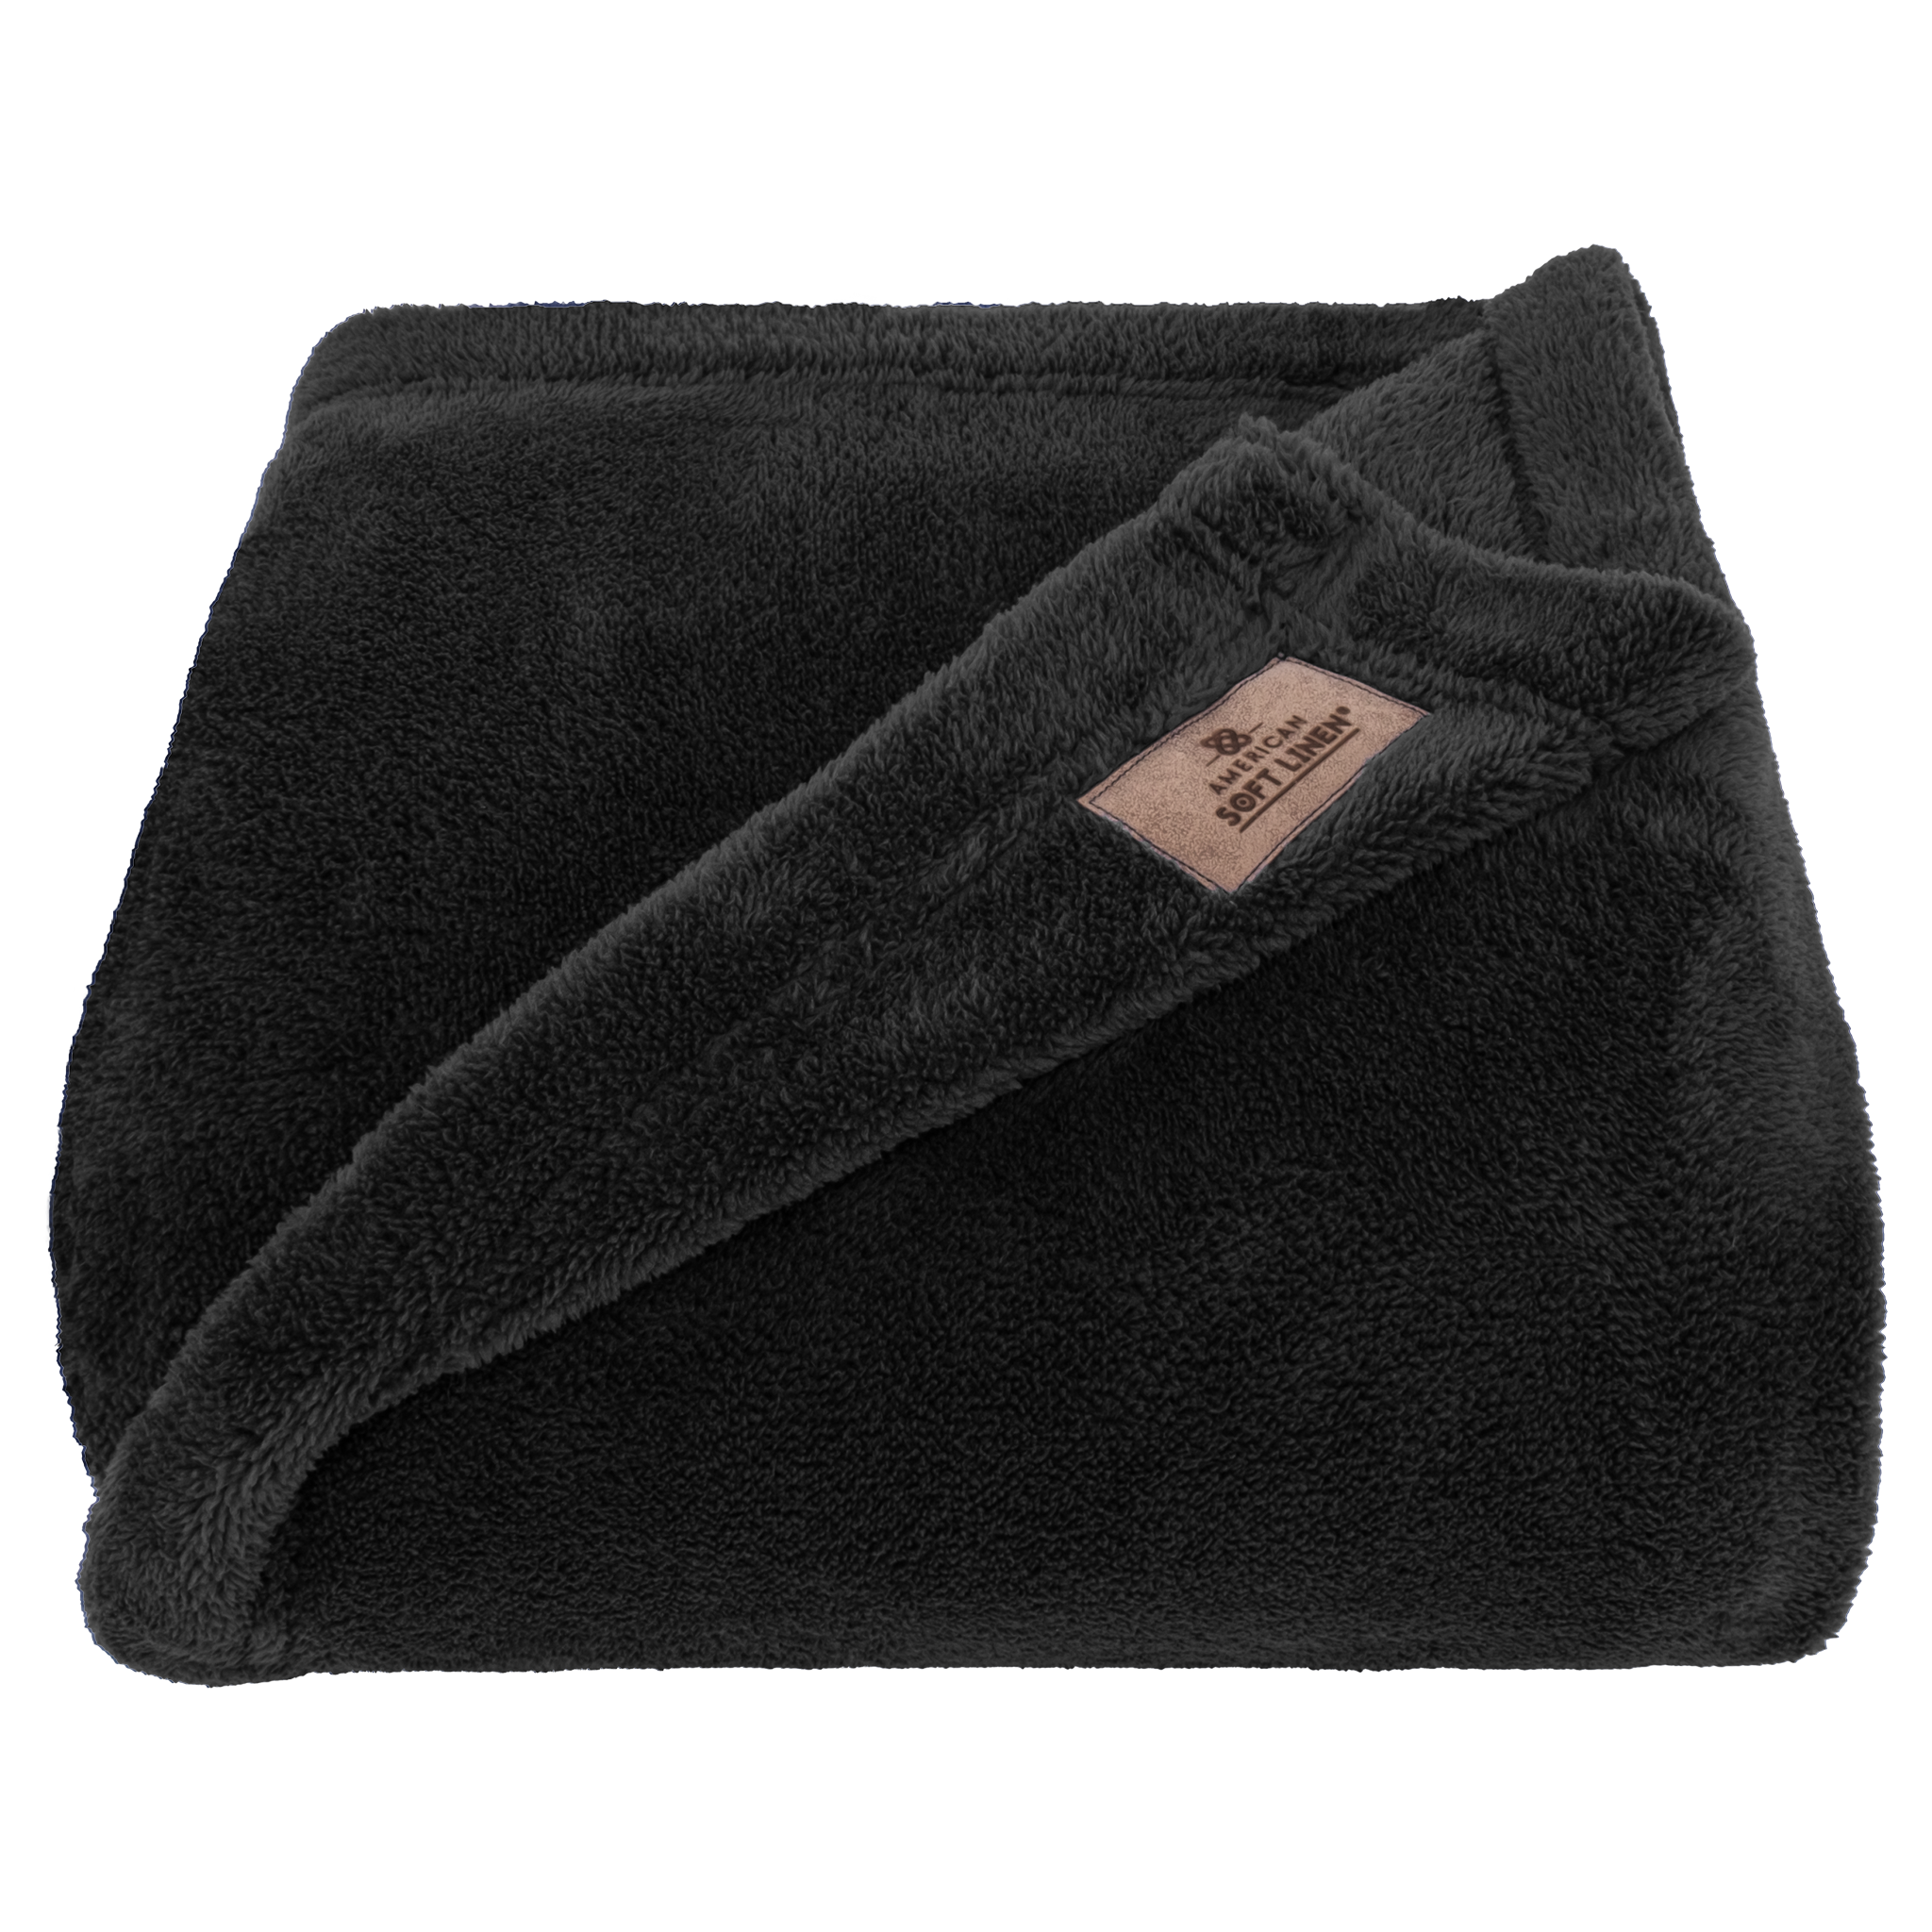 American Soft Linen - Bedding Fleece Blanket - Wholesale - 15 Set Case Pack - Twin Size 60x80 inches - Black - 3